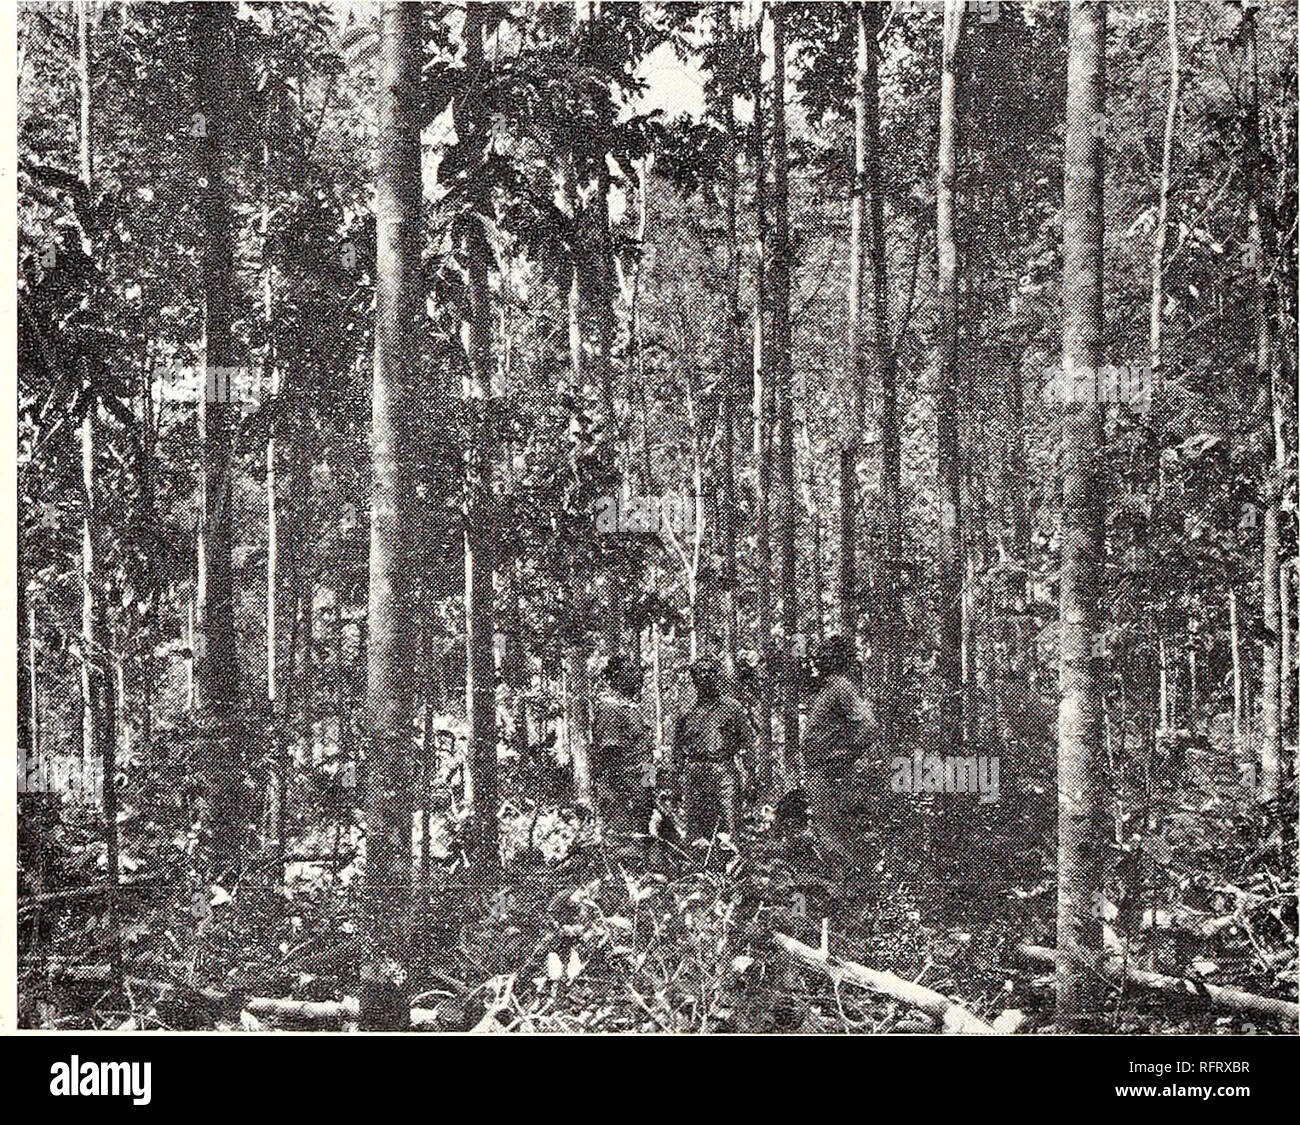 https://c8.alamy.com/comp/RFRXBR/the-caribbean-forester-forests-and-forestry-caribbean-area-periodicals-forests-and-forestry-tropics-periodicals-fig-3young-jorest-of-the-tabonuco-type-2-years-after-improvement-cut-ting-showing-the-dense-flush-of-under-growth-rodal-joven-del-tipo-tabonuco-2-ahos-despues-de-una-corta-pareial-mostrando-un-marcado-vigor-en-el-sotobosque-fig-4recently-thinned-13-yecr-old-plantation-of-broadleaf-mahogany-swietcnia-macrophylla-king-at-rio-aba-jo-showing-the-density-of-the-stand-left-plantacion-de-caoba-hondurena-de-13-ahos-dc-cdad-rcciente-mente-aclarada-en-rio-abojo-mostrando-RFRXBR.jpg